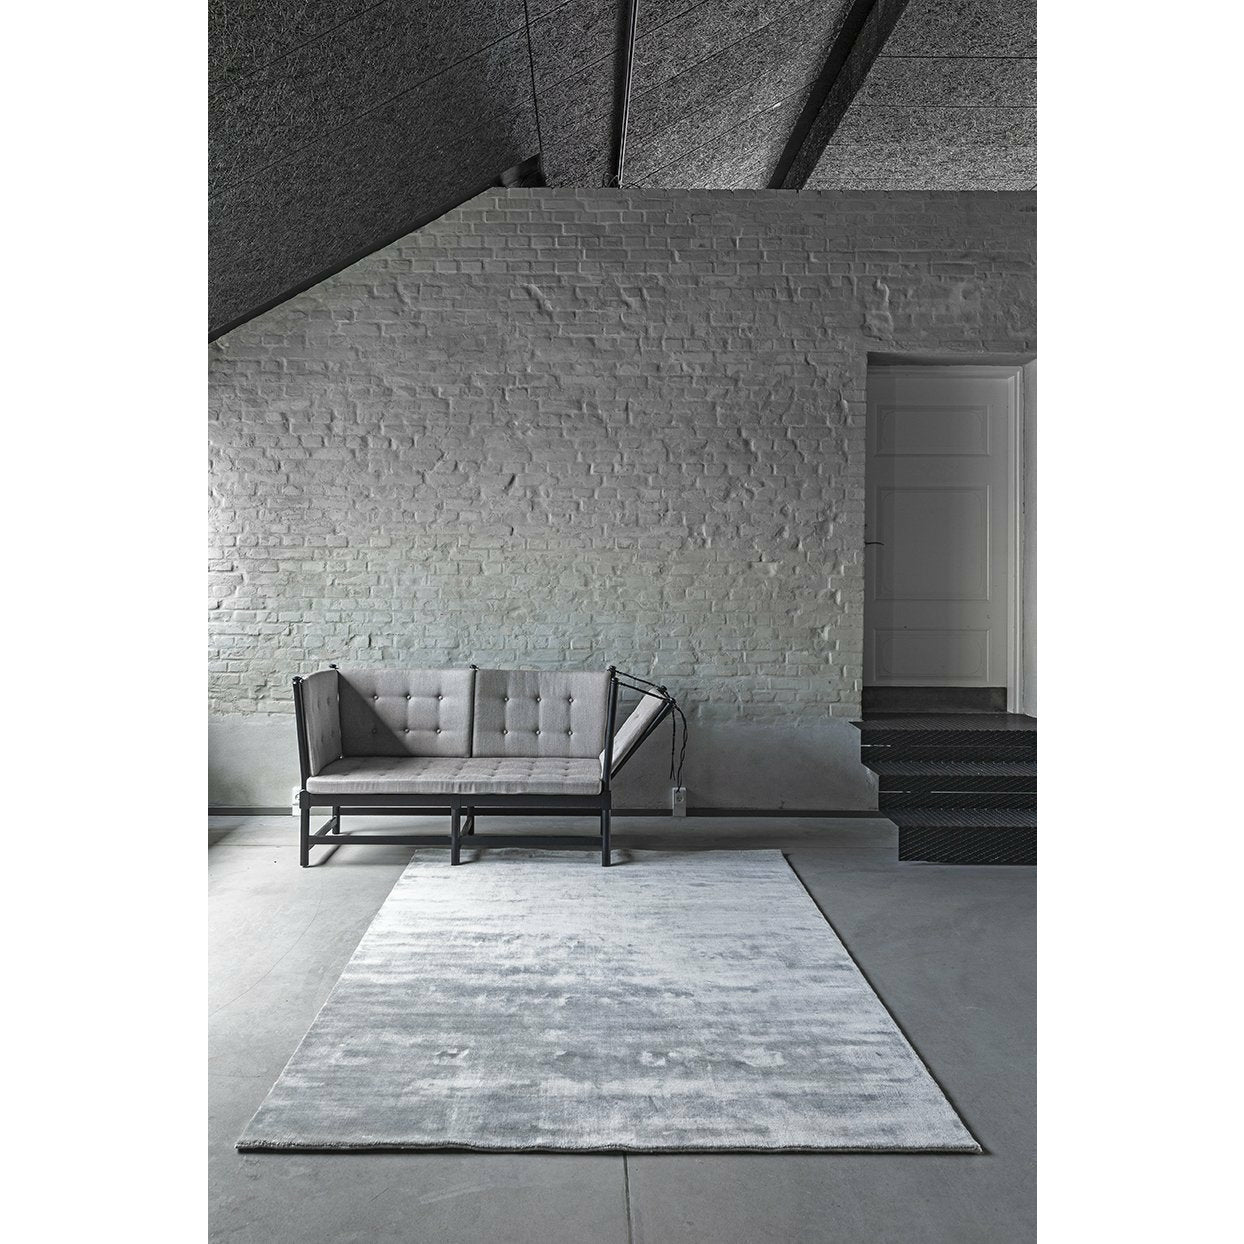 Massimo Earth Bamboo Gulvtæppe Concrete Grey, 300x400 cm